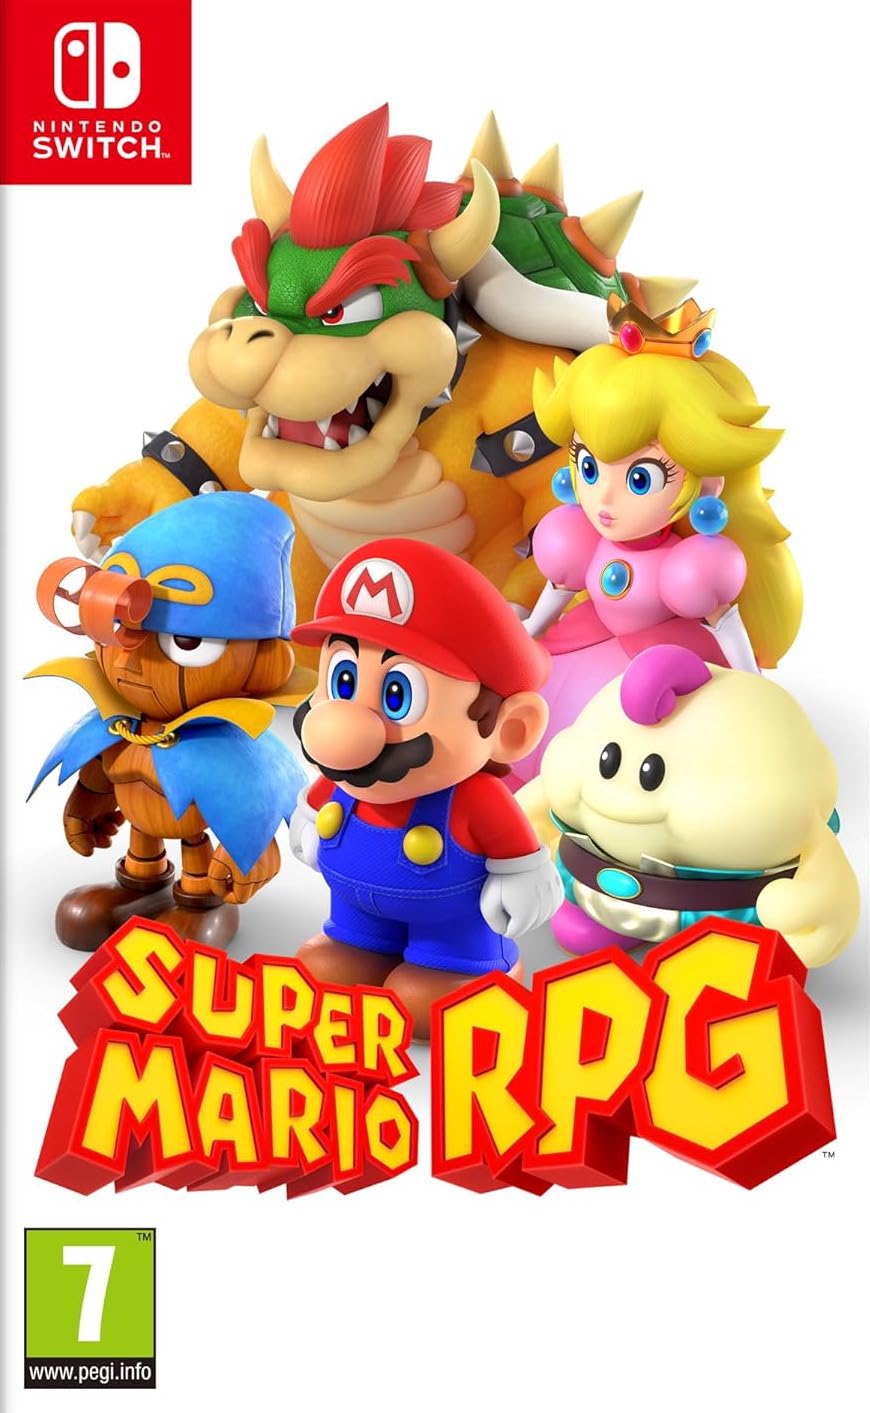 Nintendo Switch - OLED Model: Mario Red Edition With Super Mario Bros Wonder & Super Mario RPG Bundle